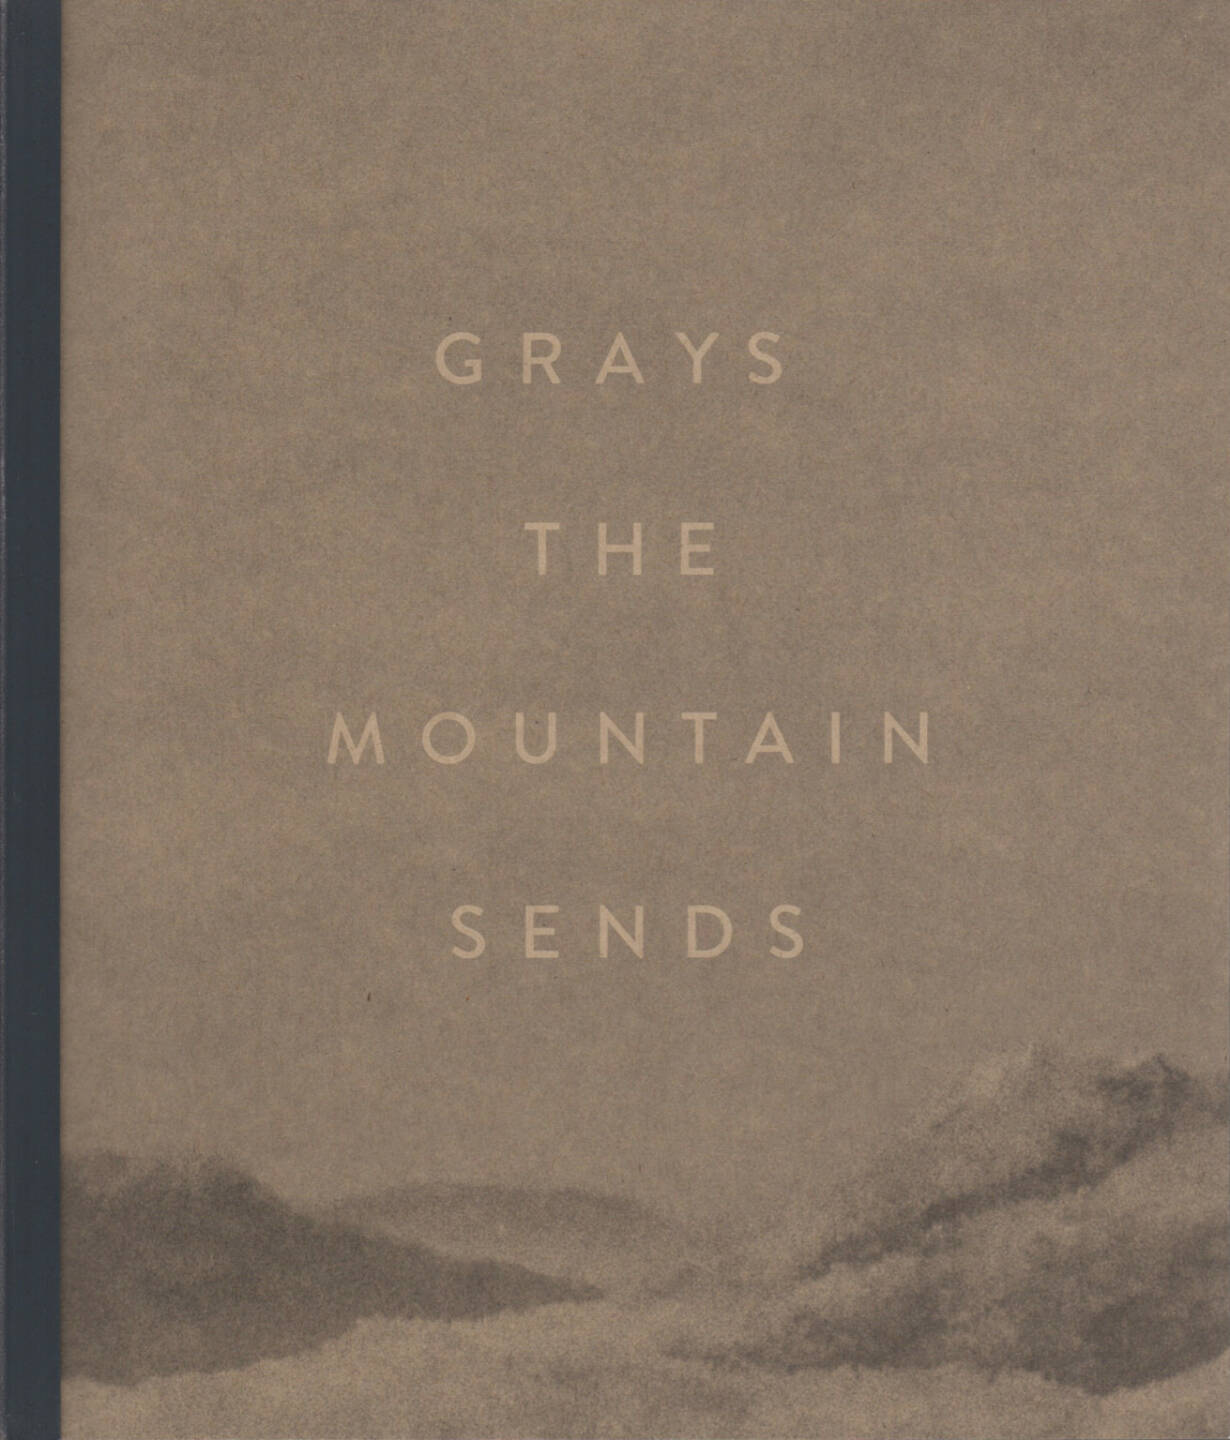 Bryan Schutmaat - Grays the Mountain Sends 150-250 Euro - http://josefchladek.com/book/bryan_schutmaat_-_grays_the_mountain_sends